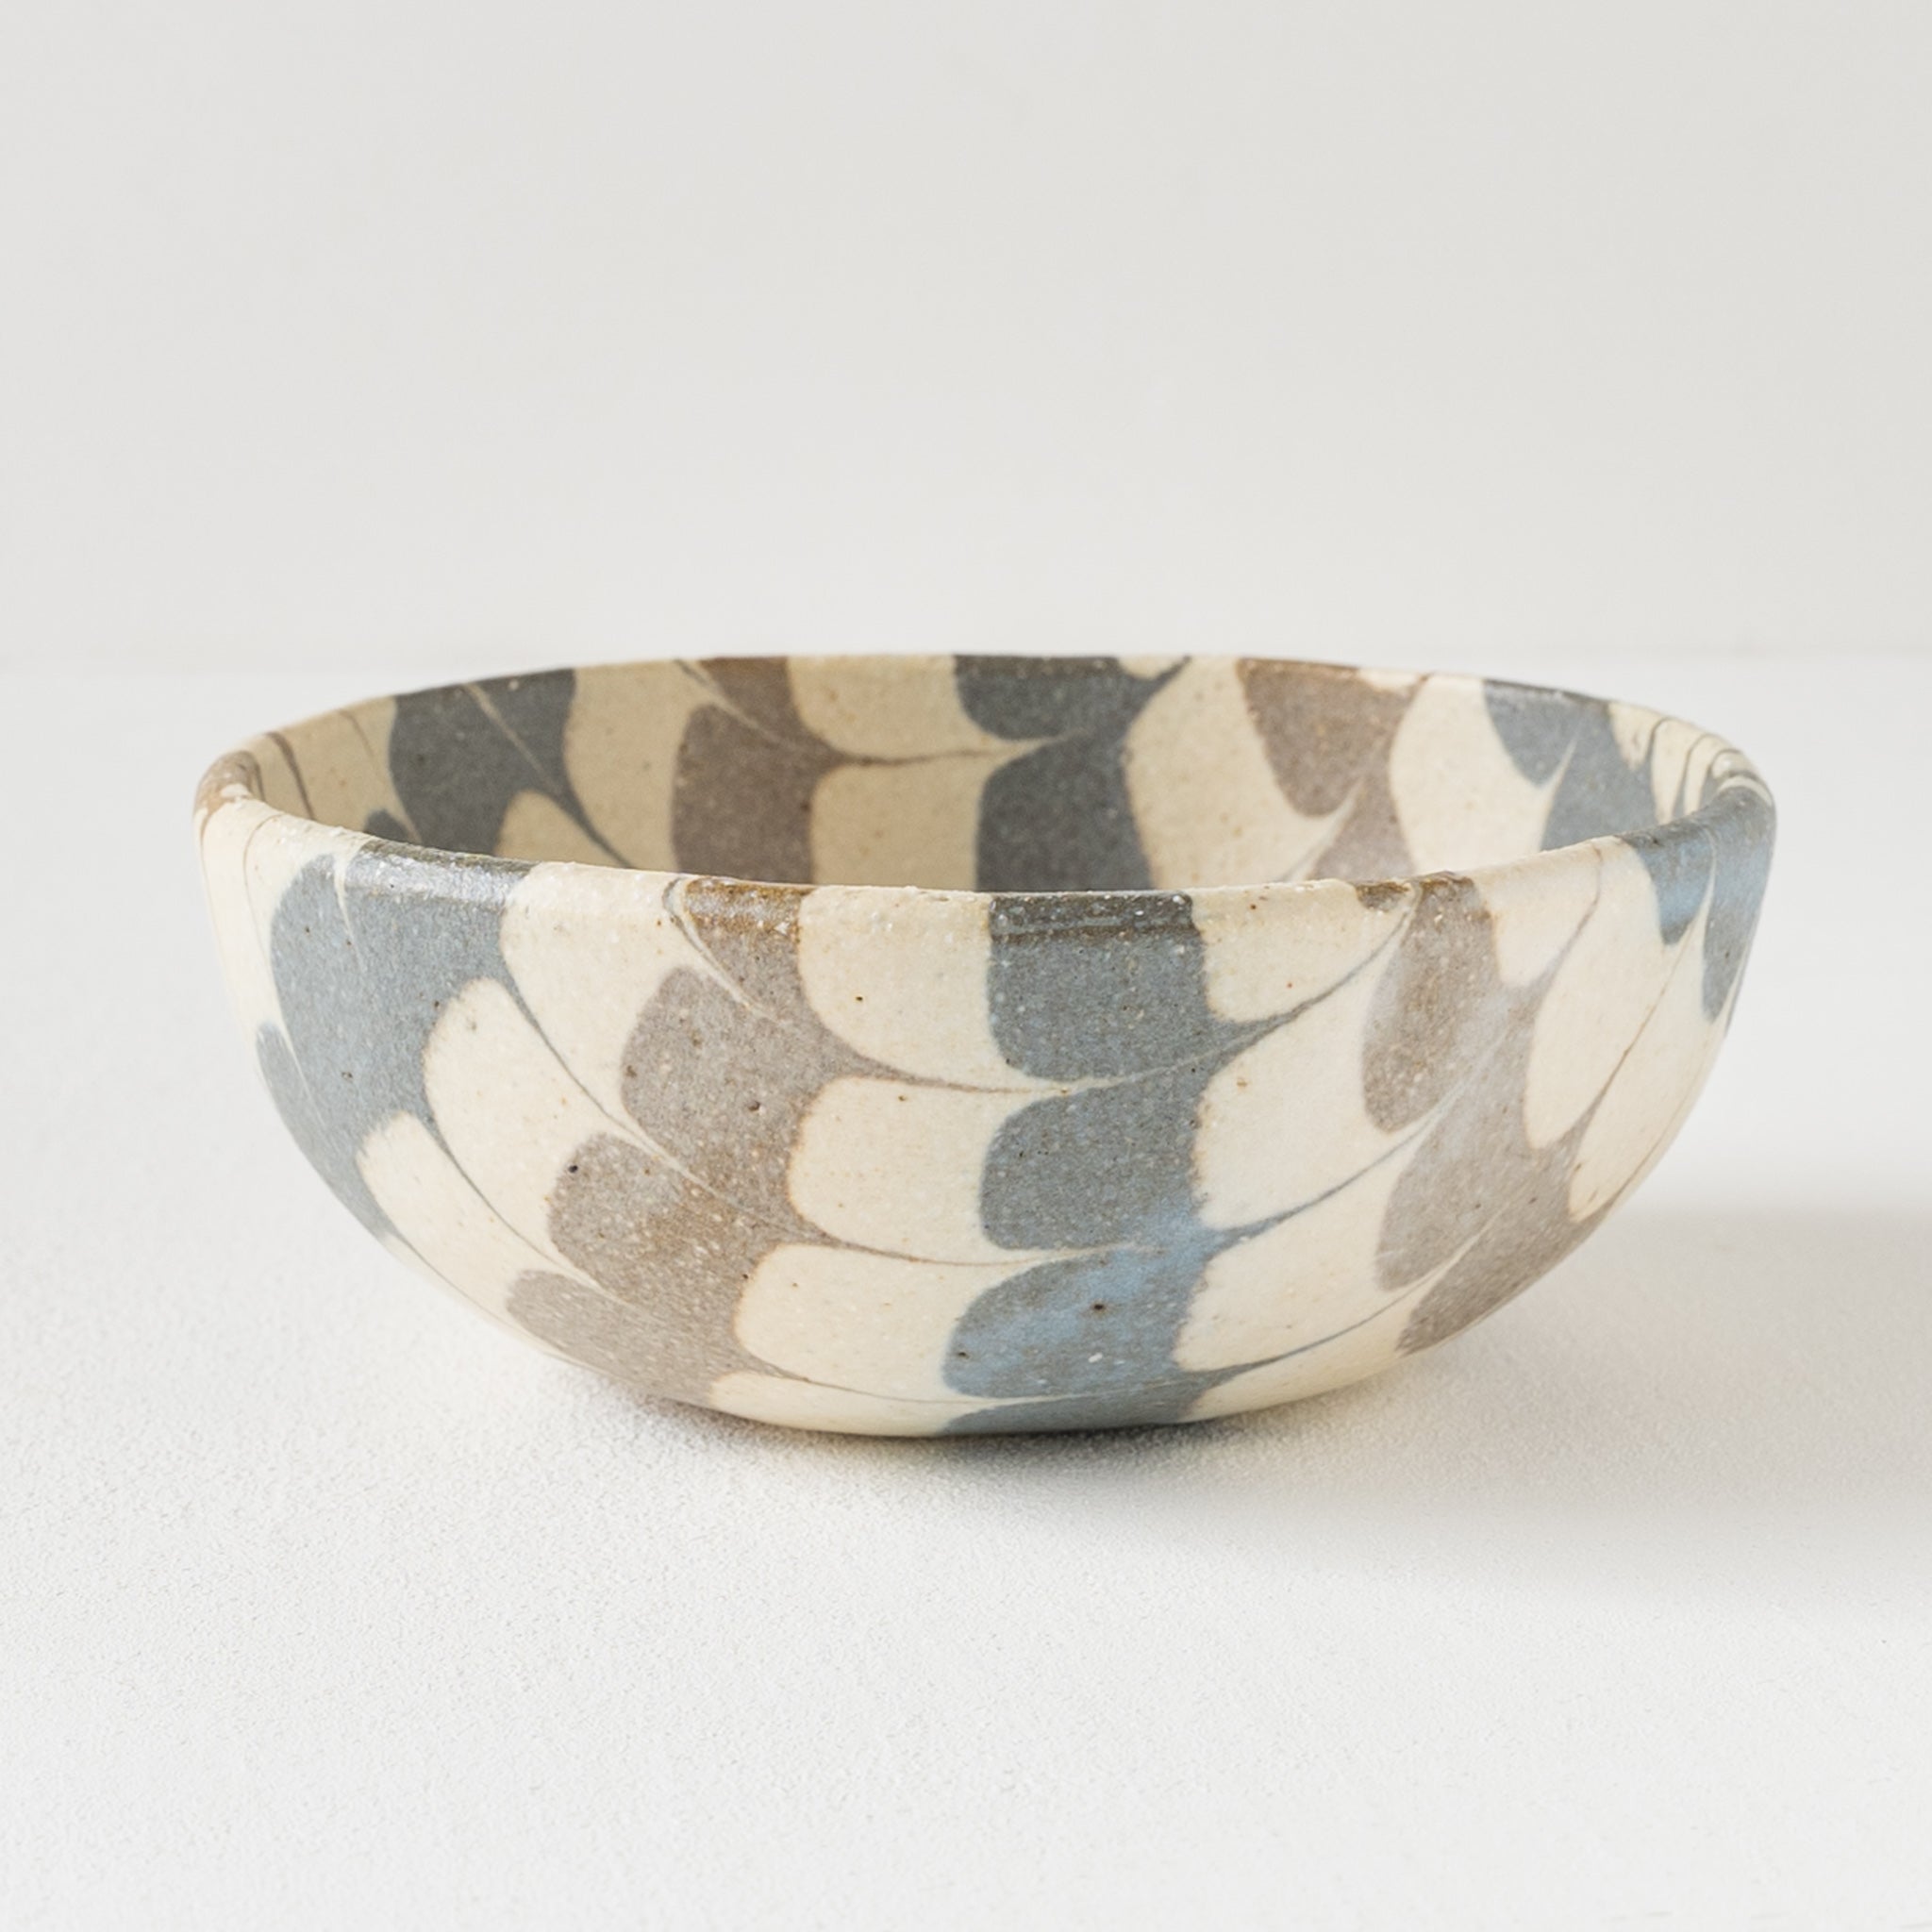 Hanako Sakashita's quail-patterned round bowl with wonderful kneading